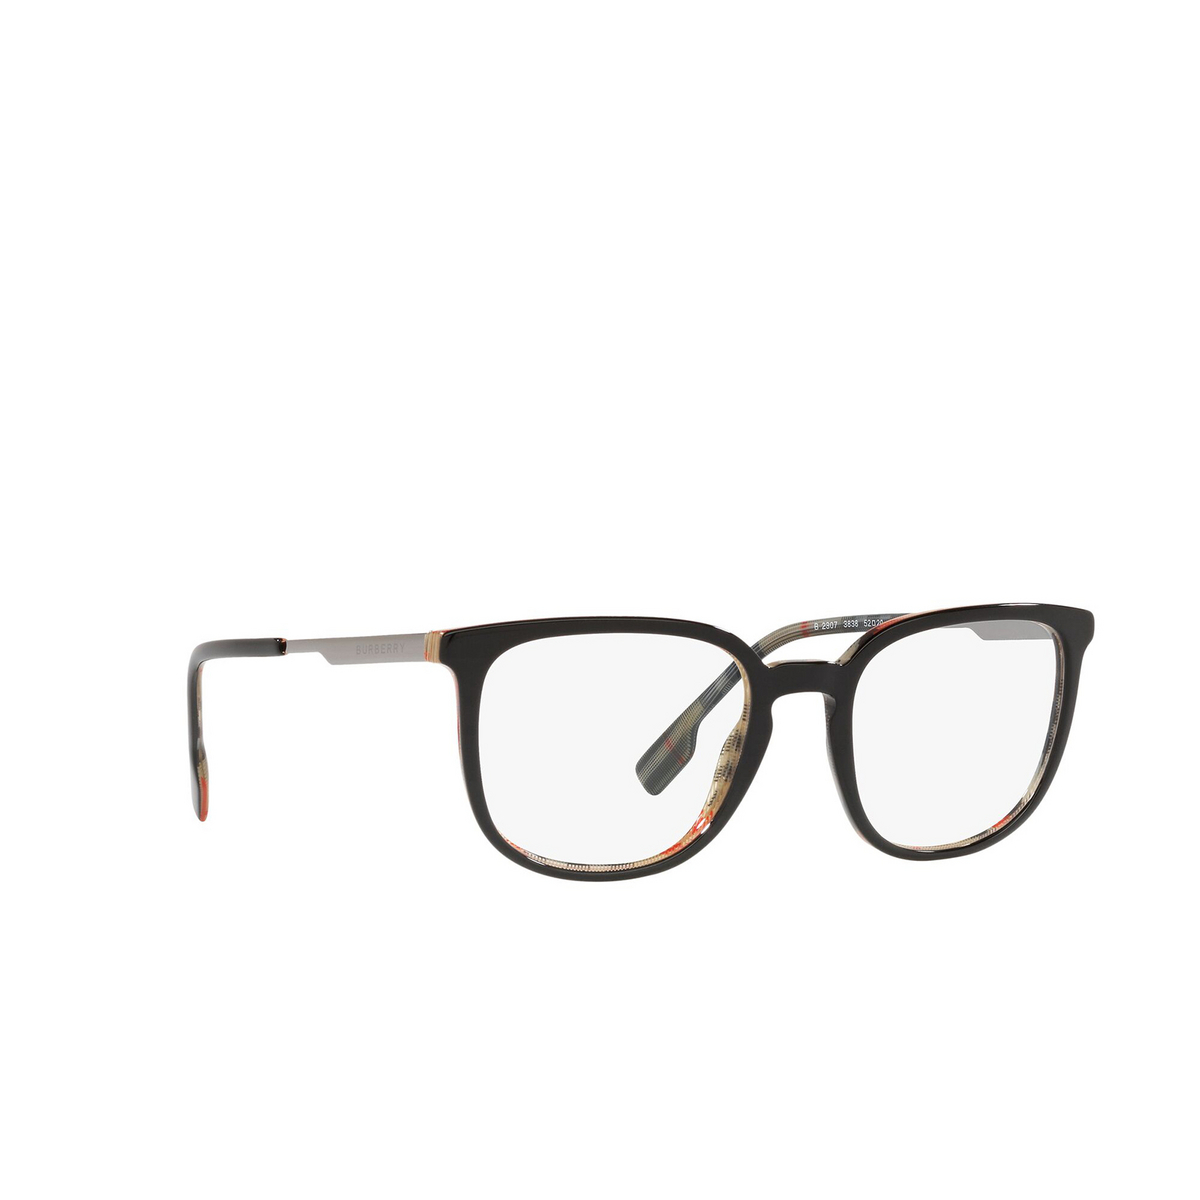 Burberry COMPTON Eyeglasses 3838 Top Black on Vintage Check - three-quarters view